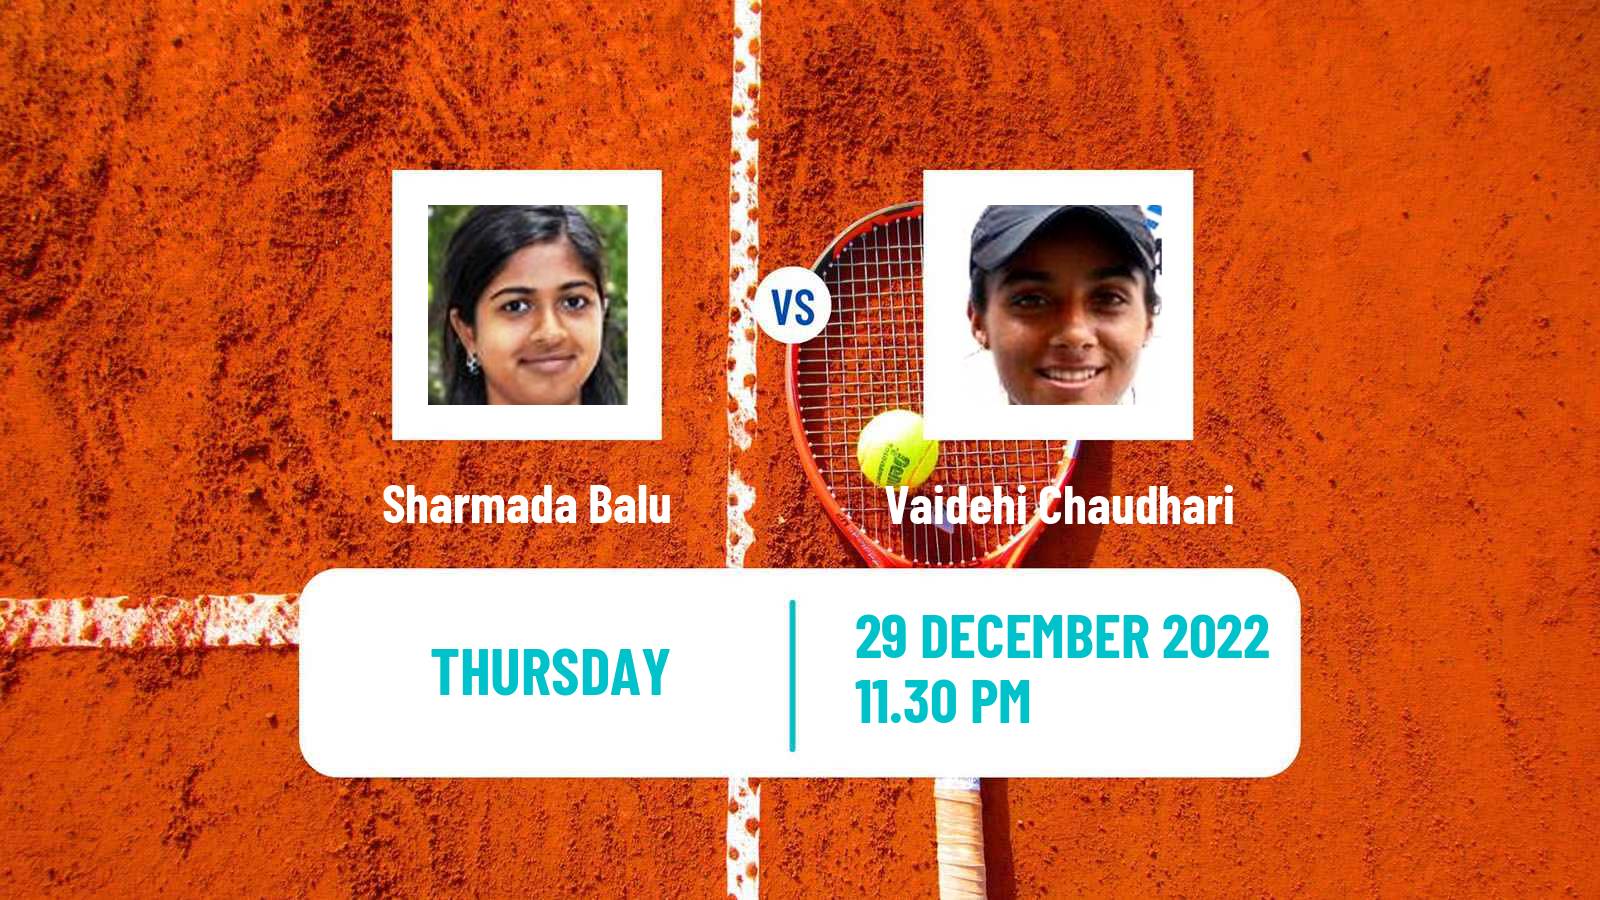 Tennis ITF Tournaments Sharmada Balu - Vaidehi Chaudhari